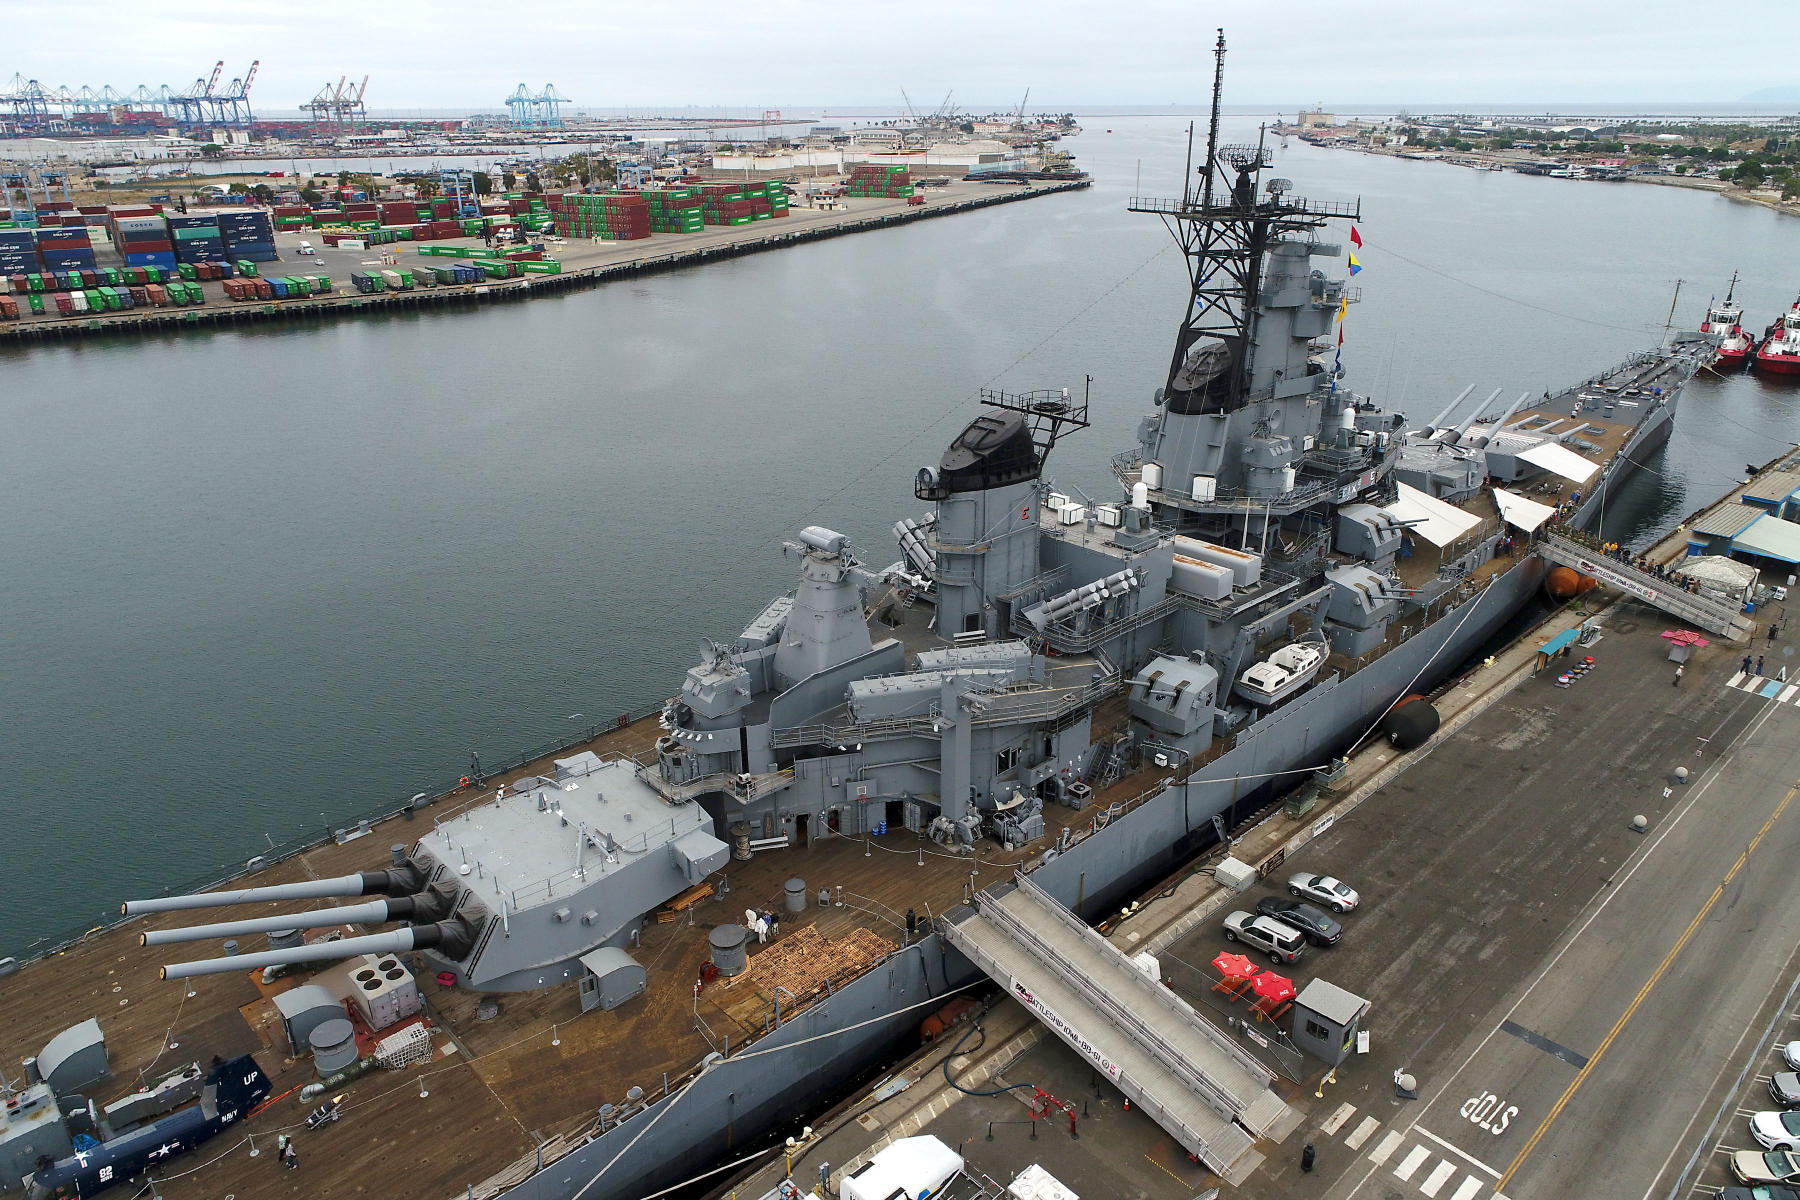 Battleship USS Iowa in Long Beach, CA